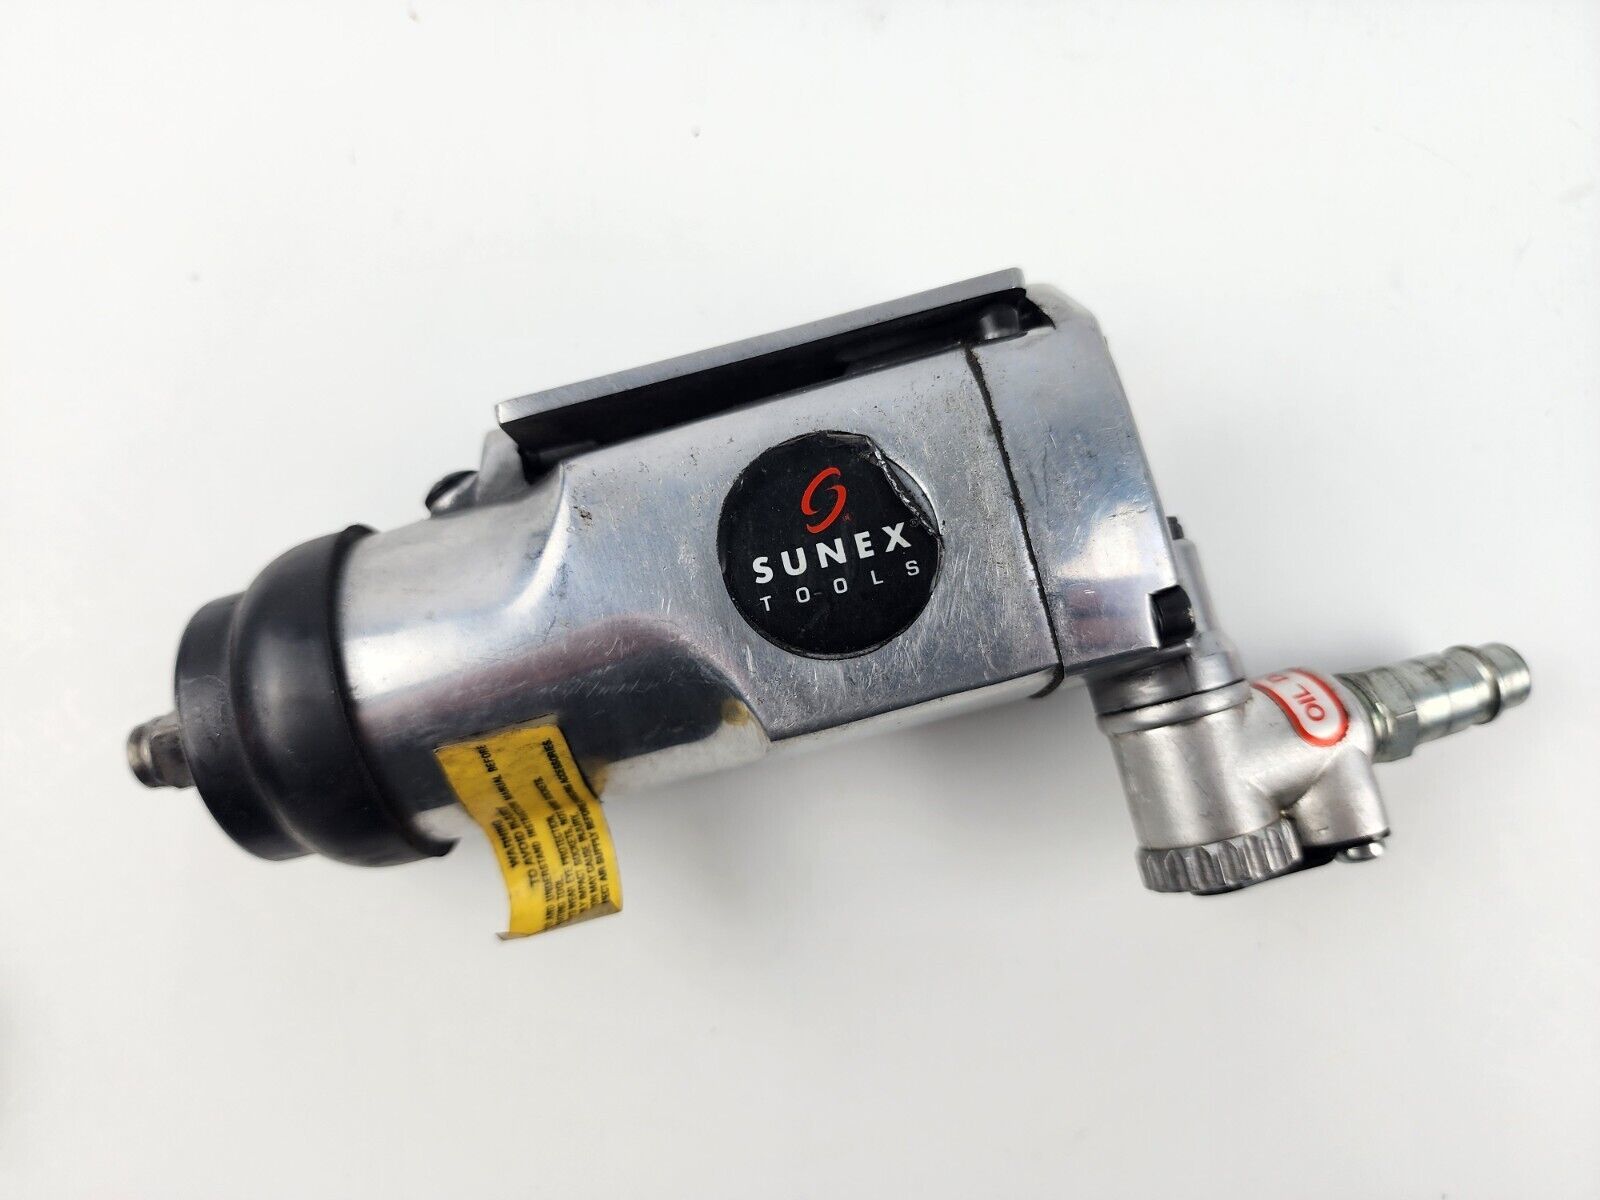 Sunex 3/8" Drive Butterfly Palm Grip Air Impact Wrench Built in Regulator SX111 - $29.69